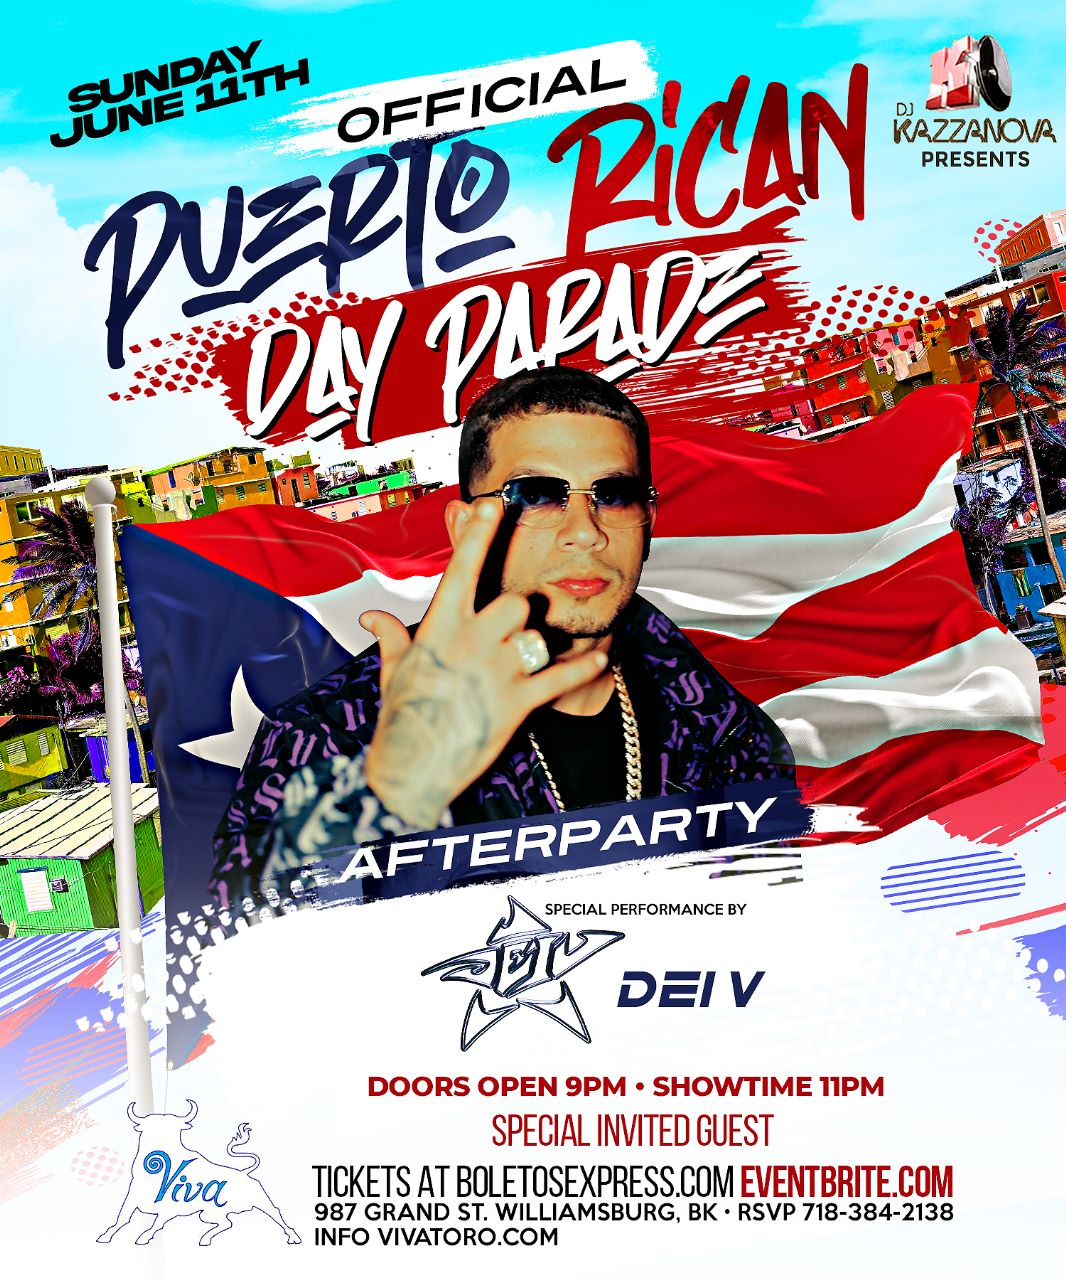 Dei V “Puerto Rican Day Parade After Party” Tickets BoletosExpress